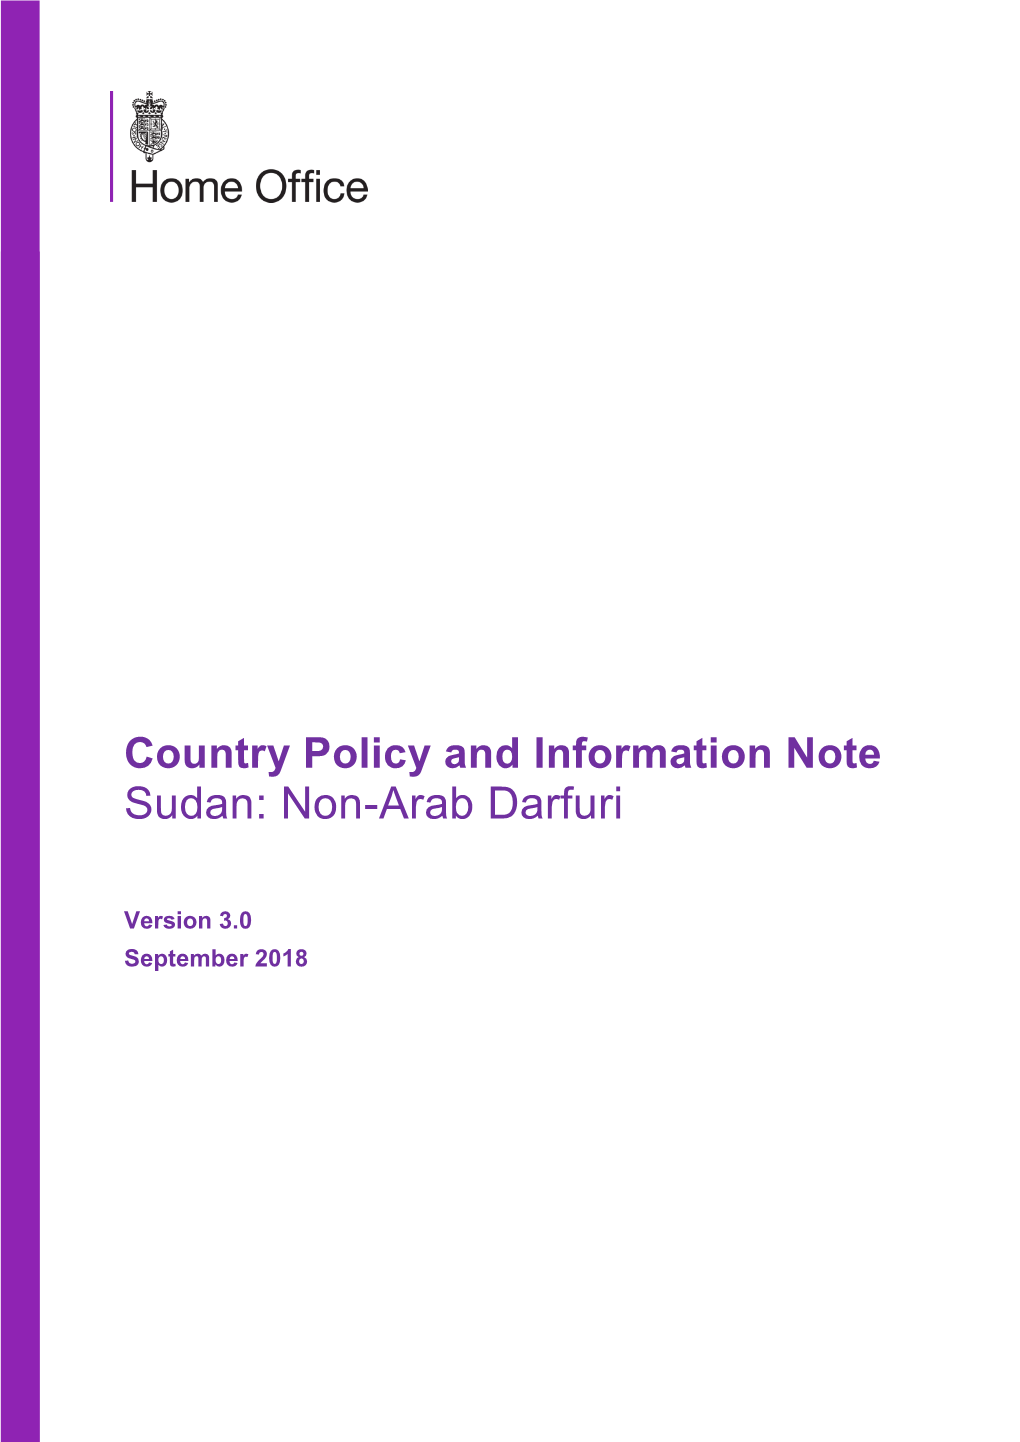 Sudan: Non-Arab Darfuri